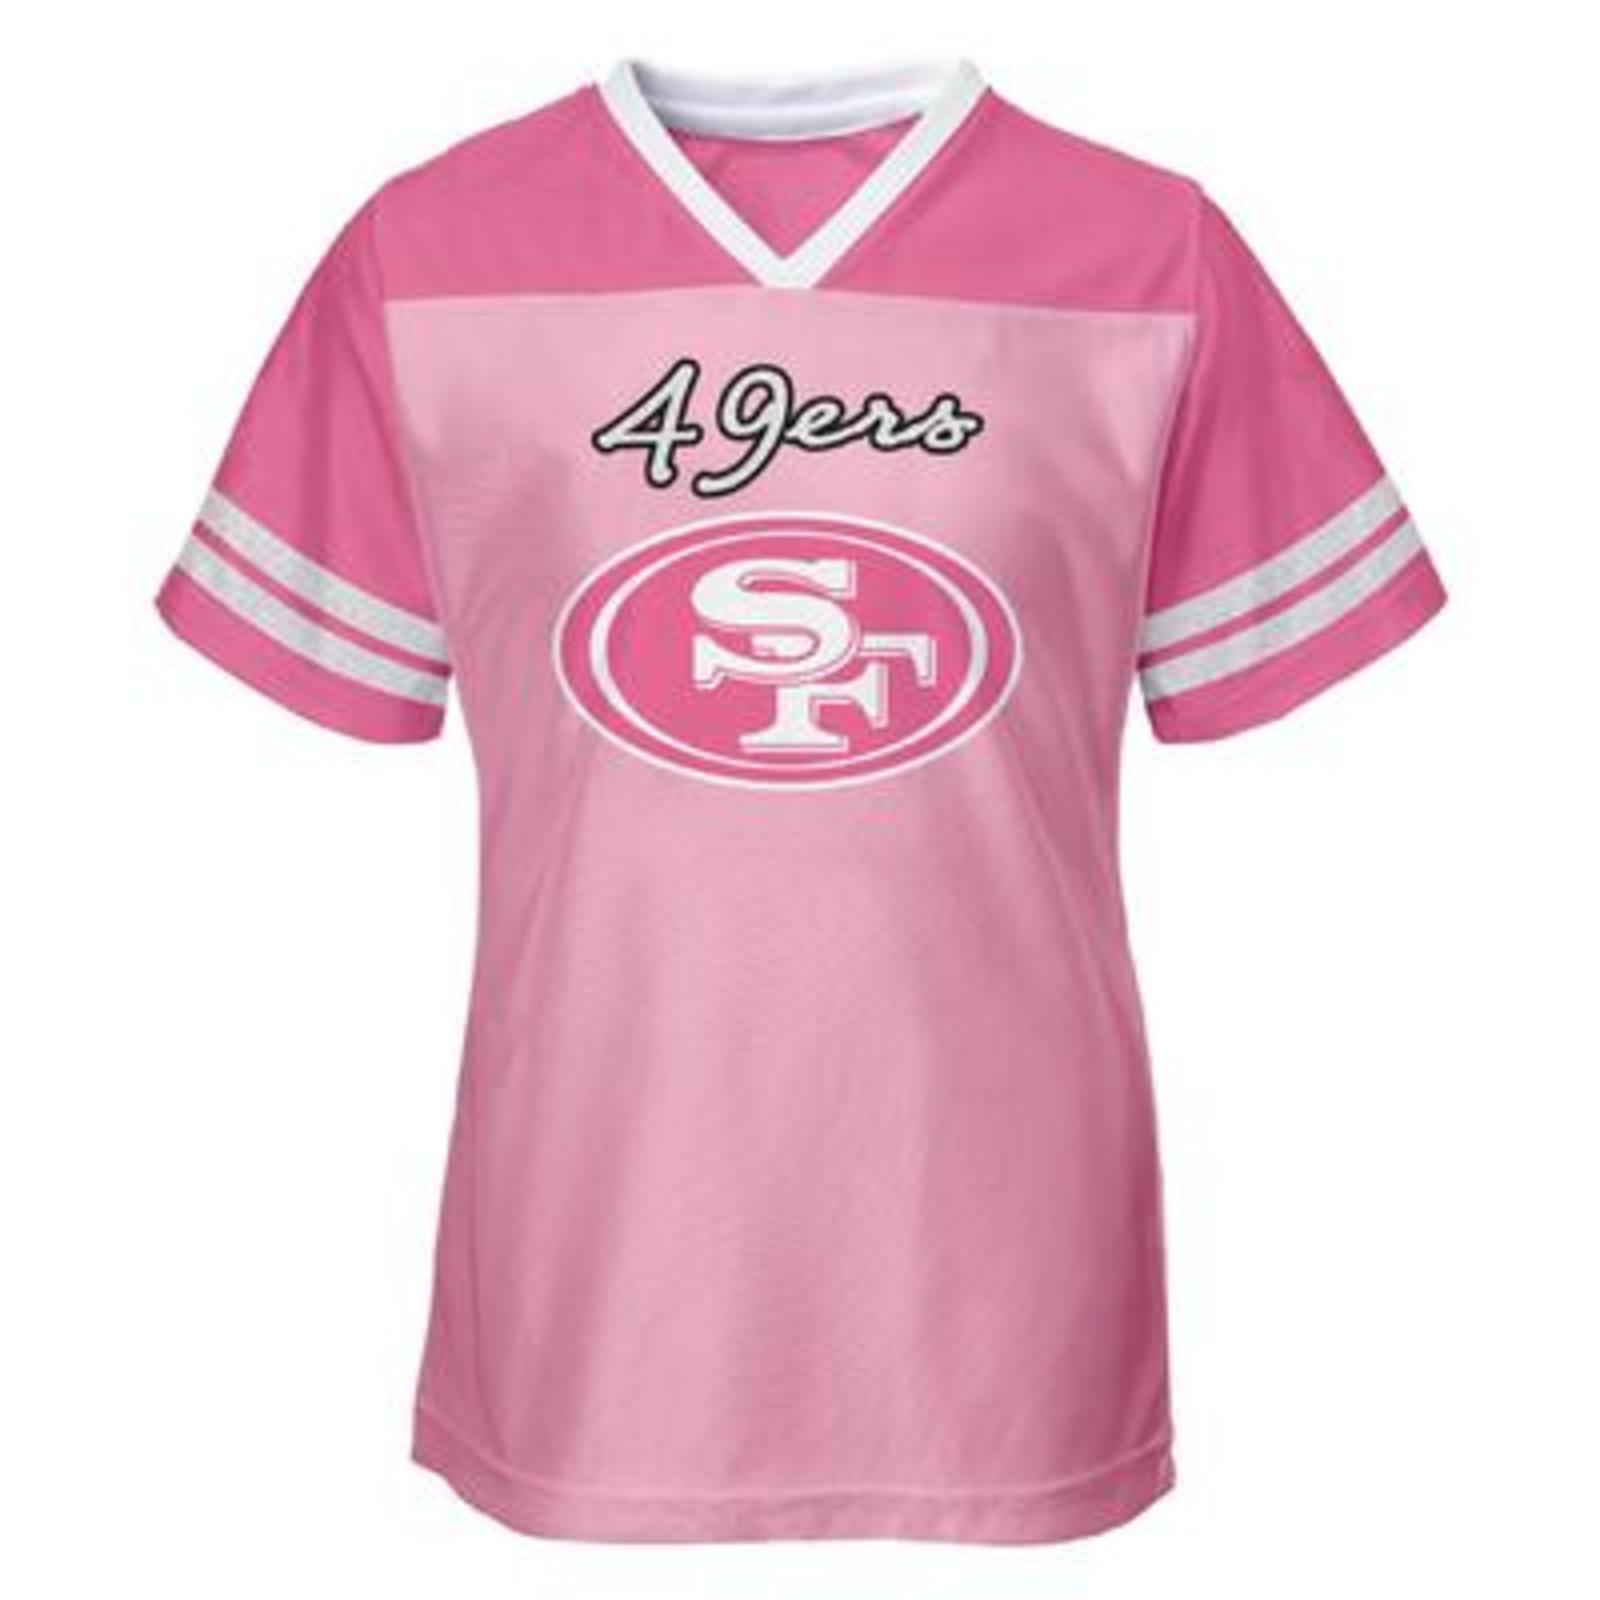 NFL Toddler Girls' Jersey Shirt - San Francisco 49ers